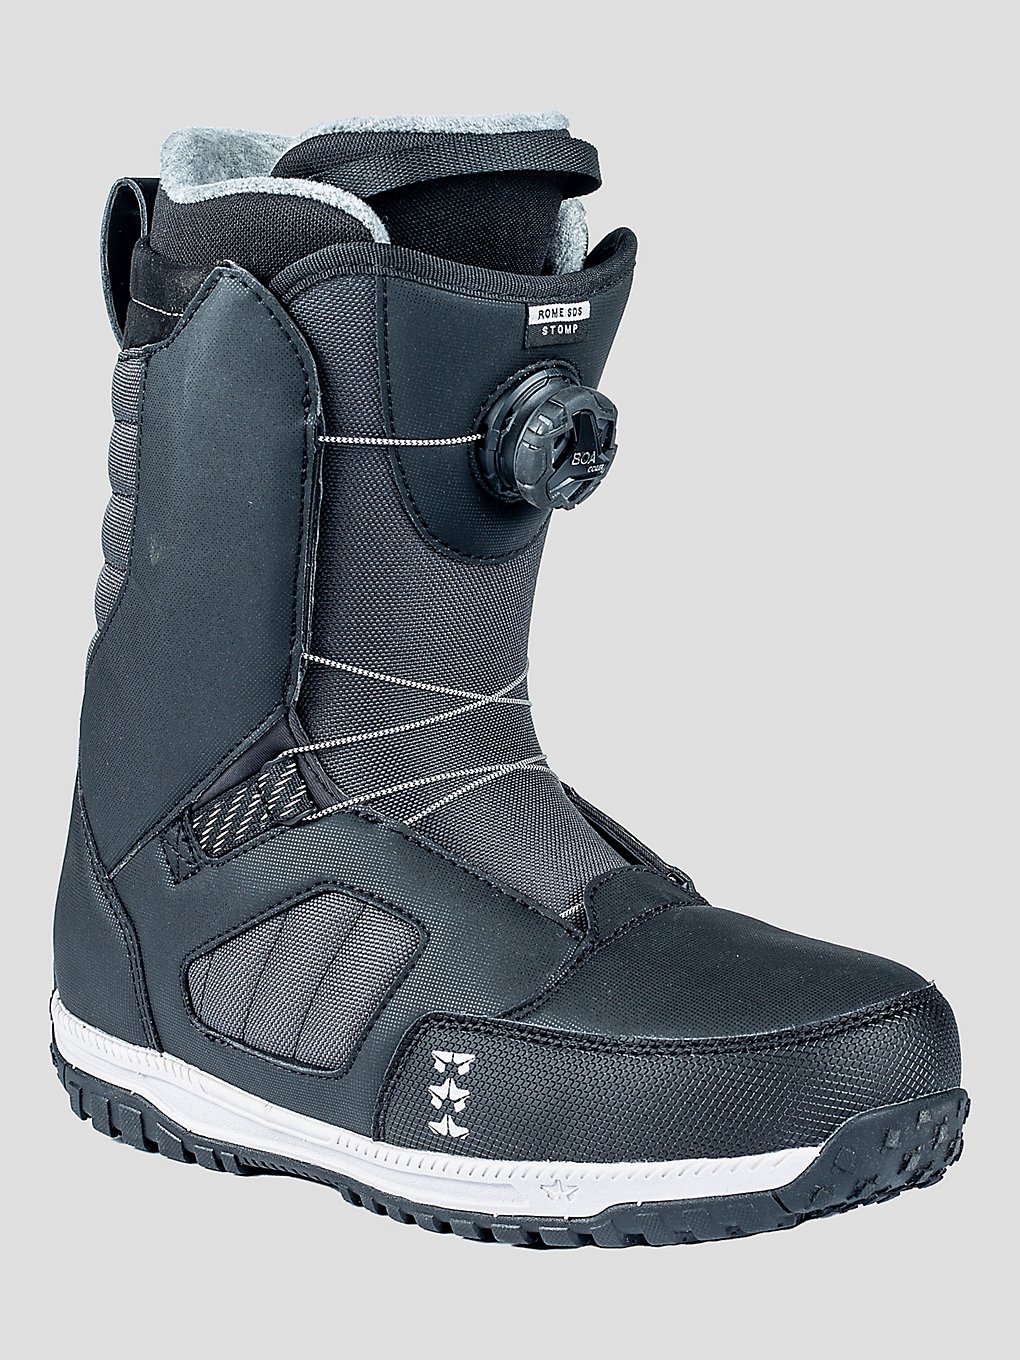 Rome Stomp BOA Boots de Snowboard noir